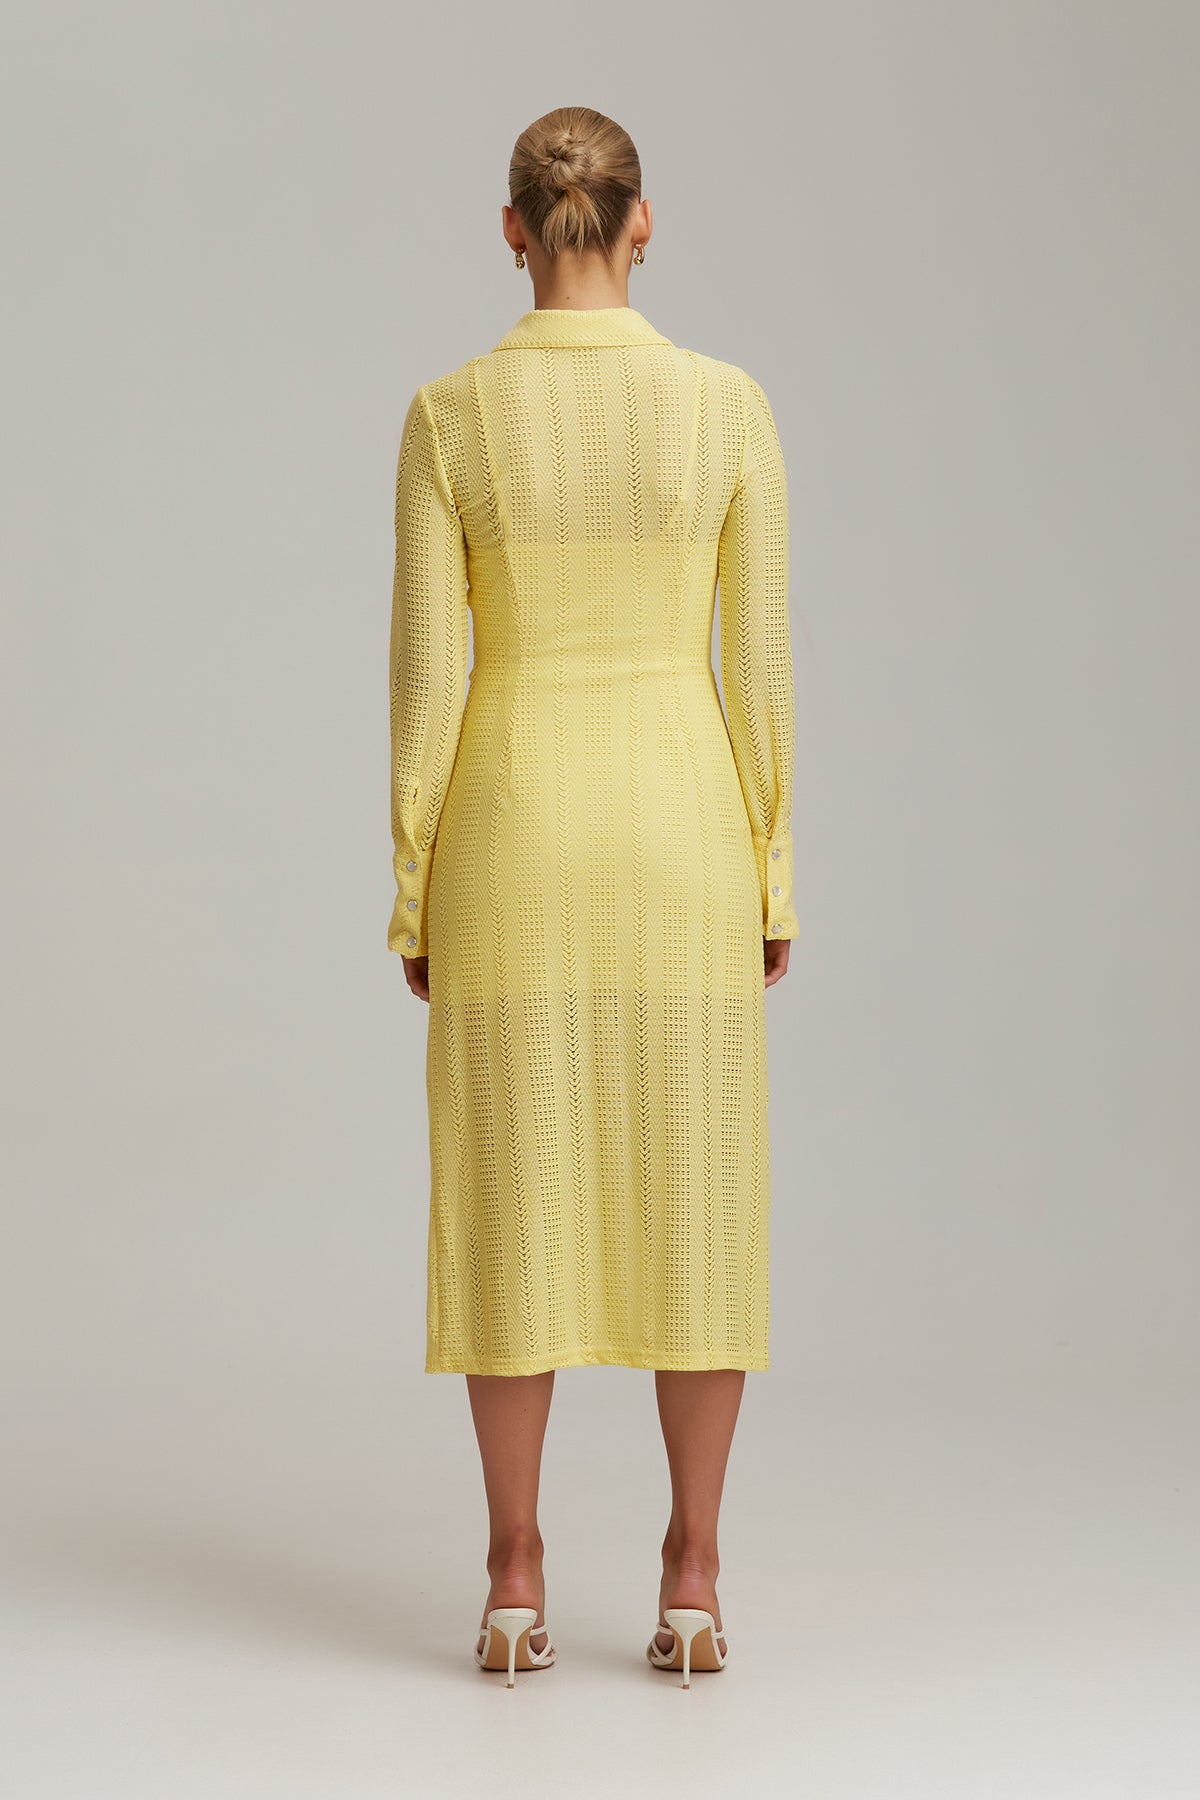 C/MEO Collective - First Dance Dress - Lemon